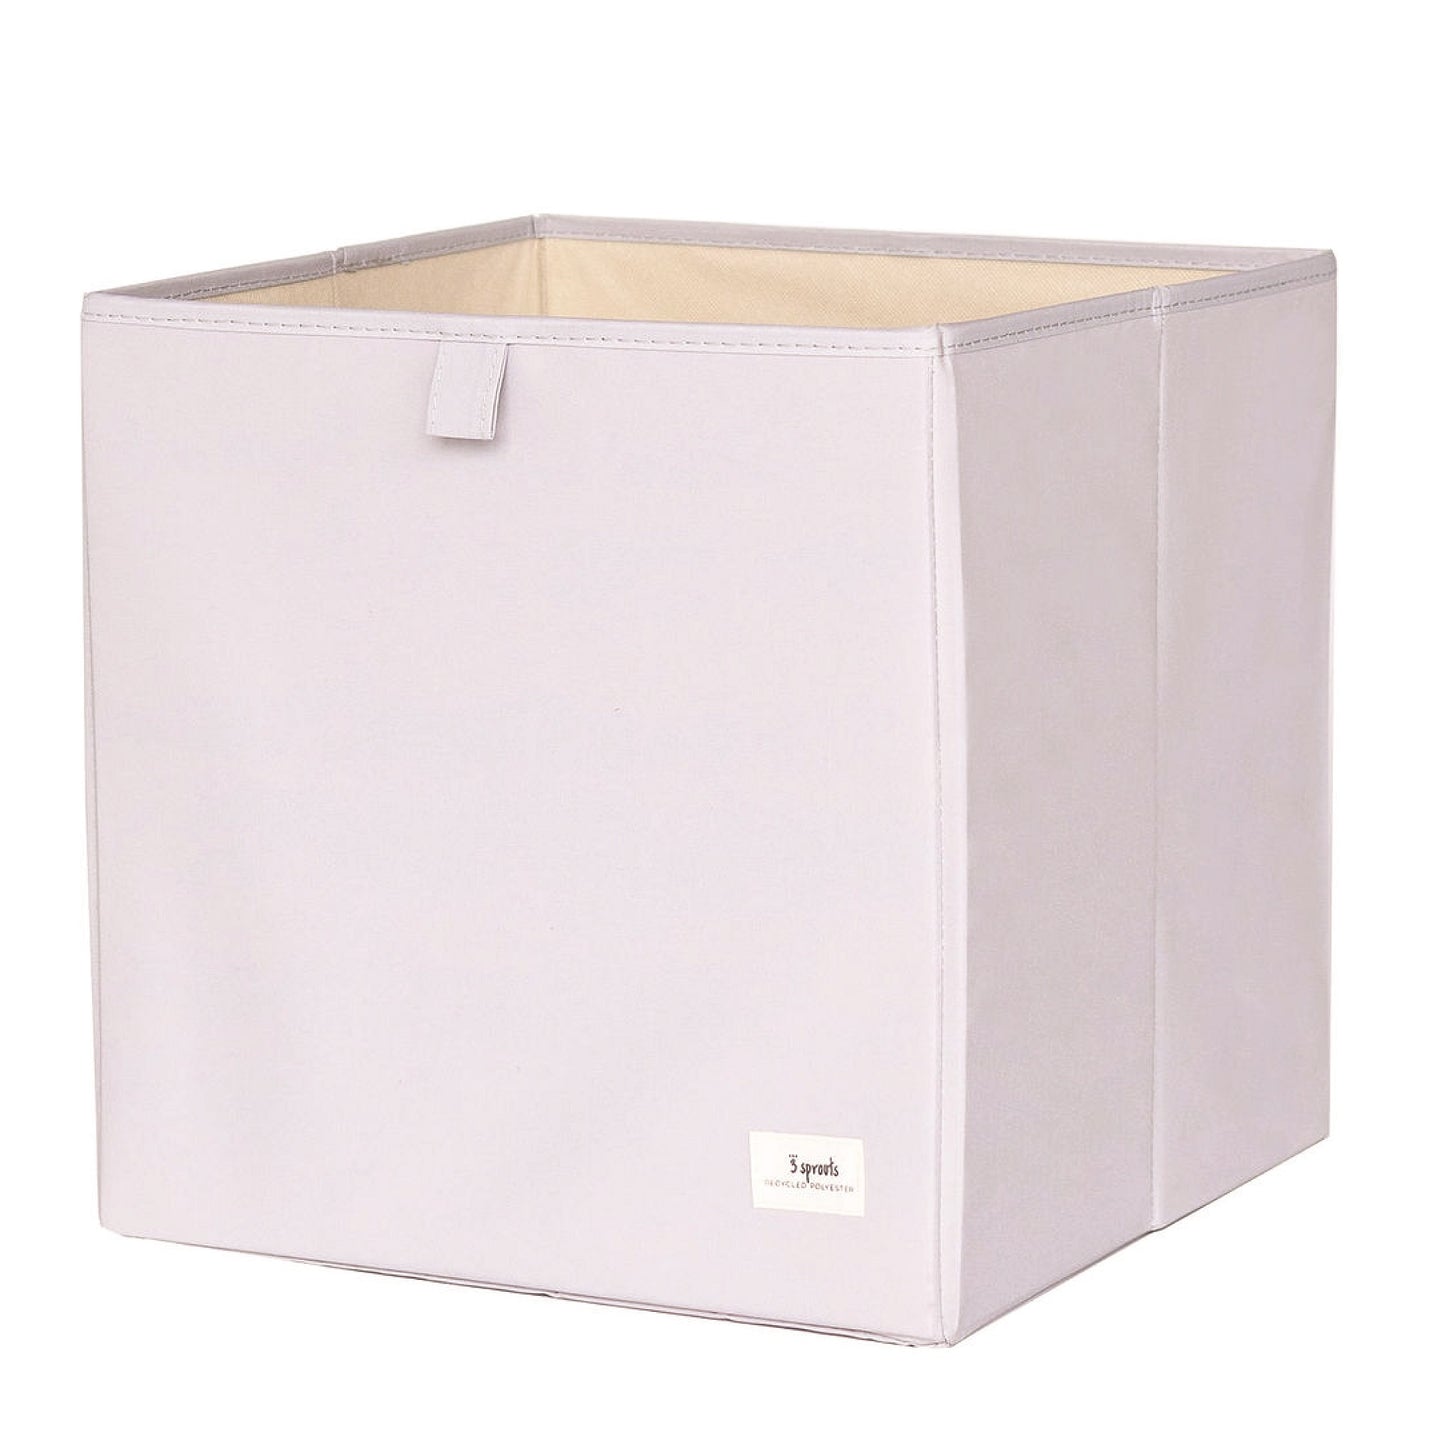 *recycled fabric storage box - light gray